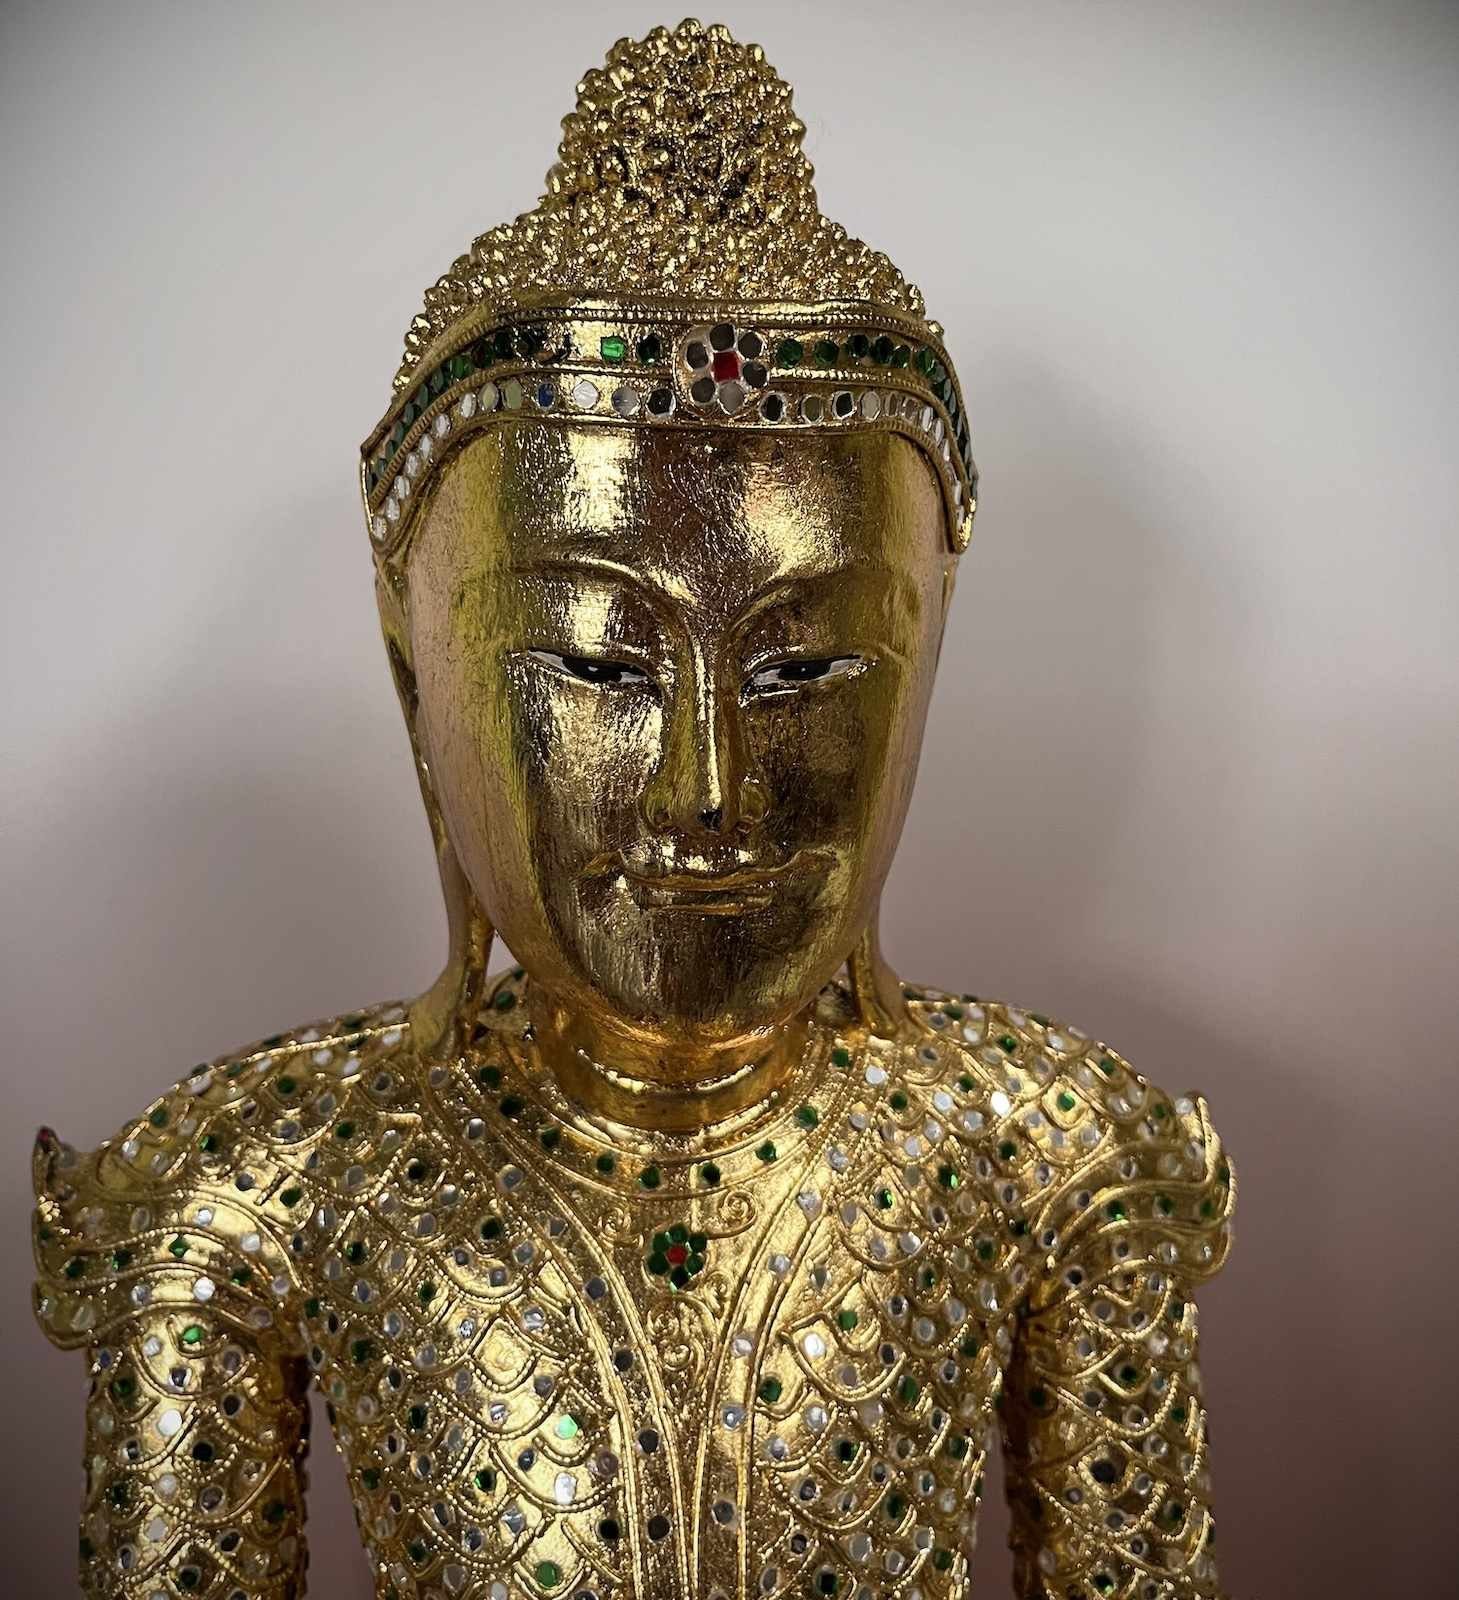 LifeStyle blattvergoldet Buddhafigur Buddha Thailand Holz Statue Asien